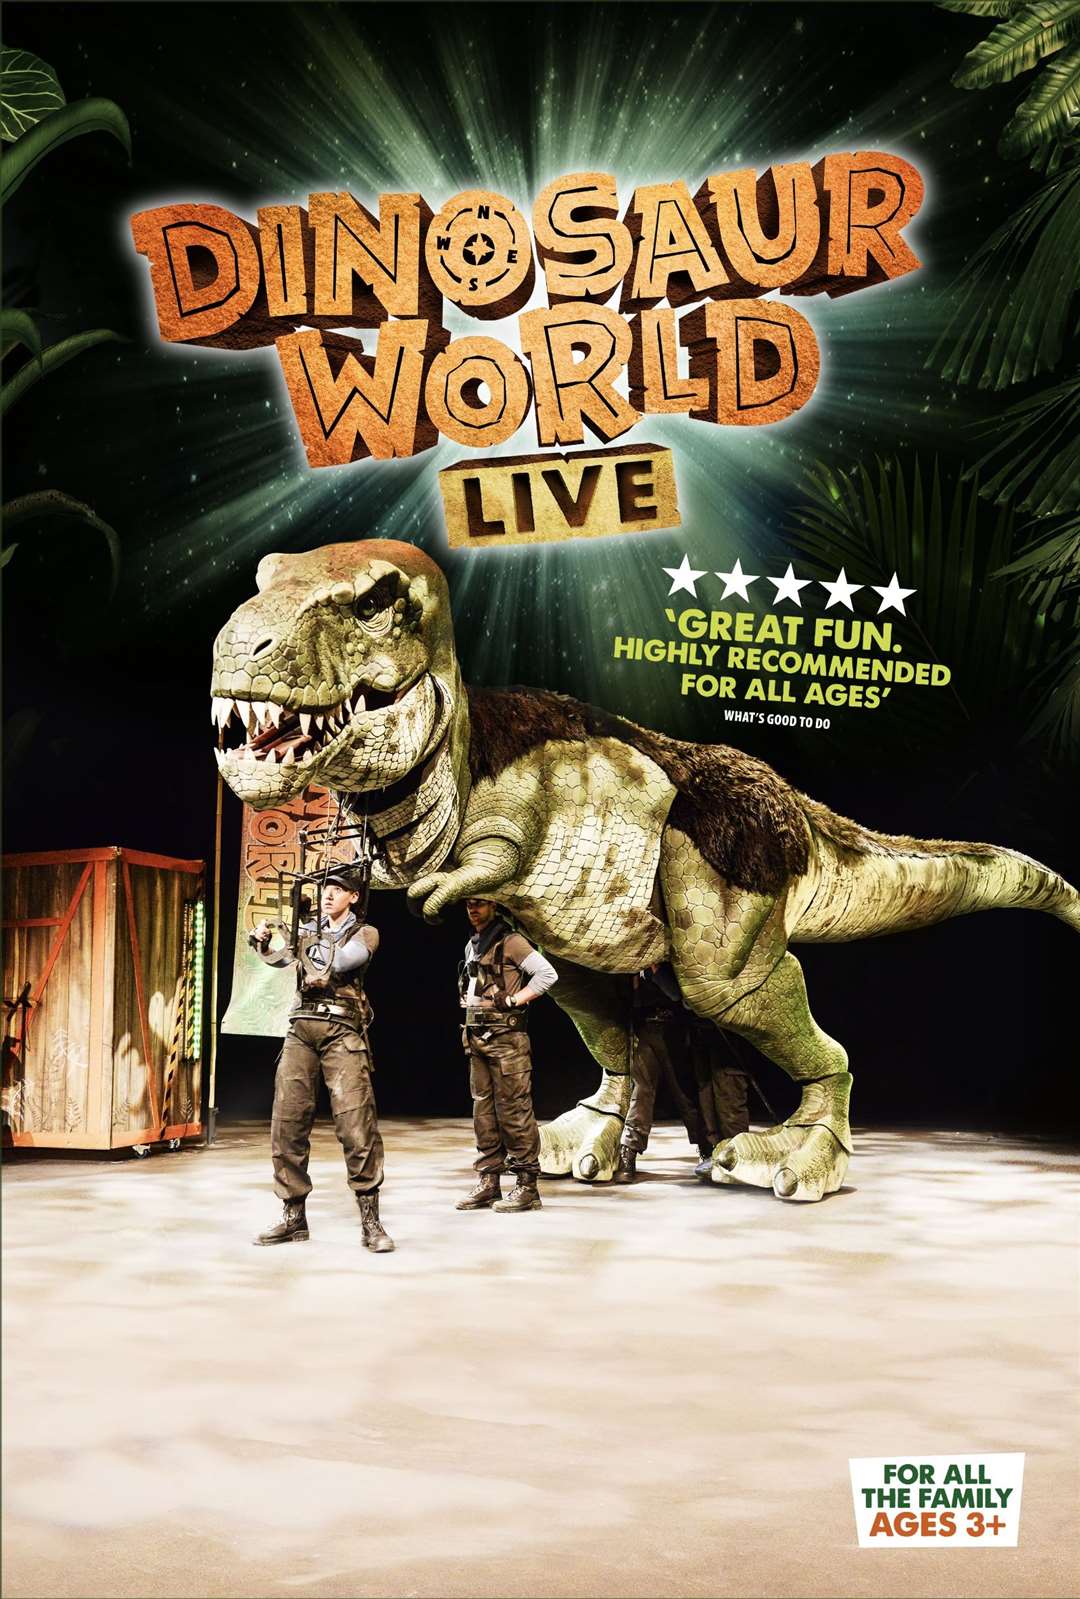 Dinosaur World Live is at Eden Court from June 21-23.